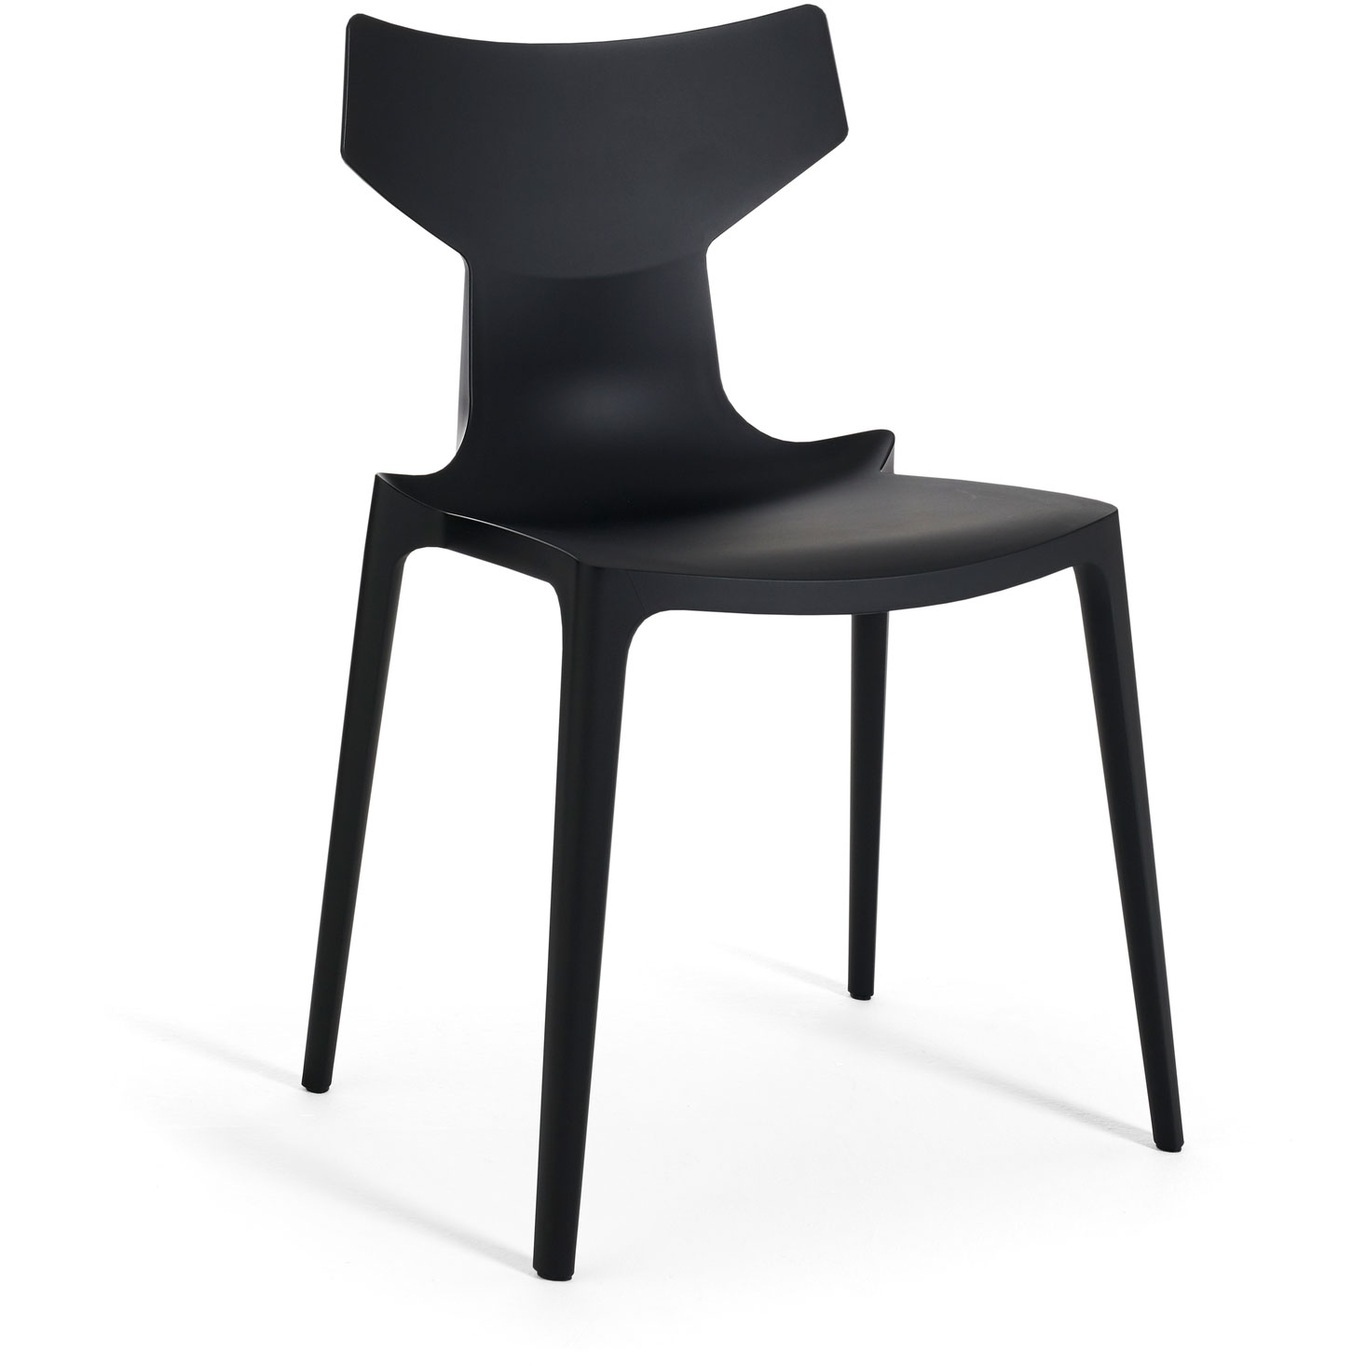 Re-Chair Stuhl by Illy, Matt Black